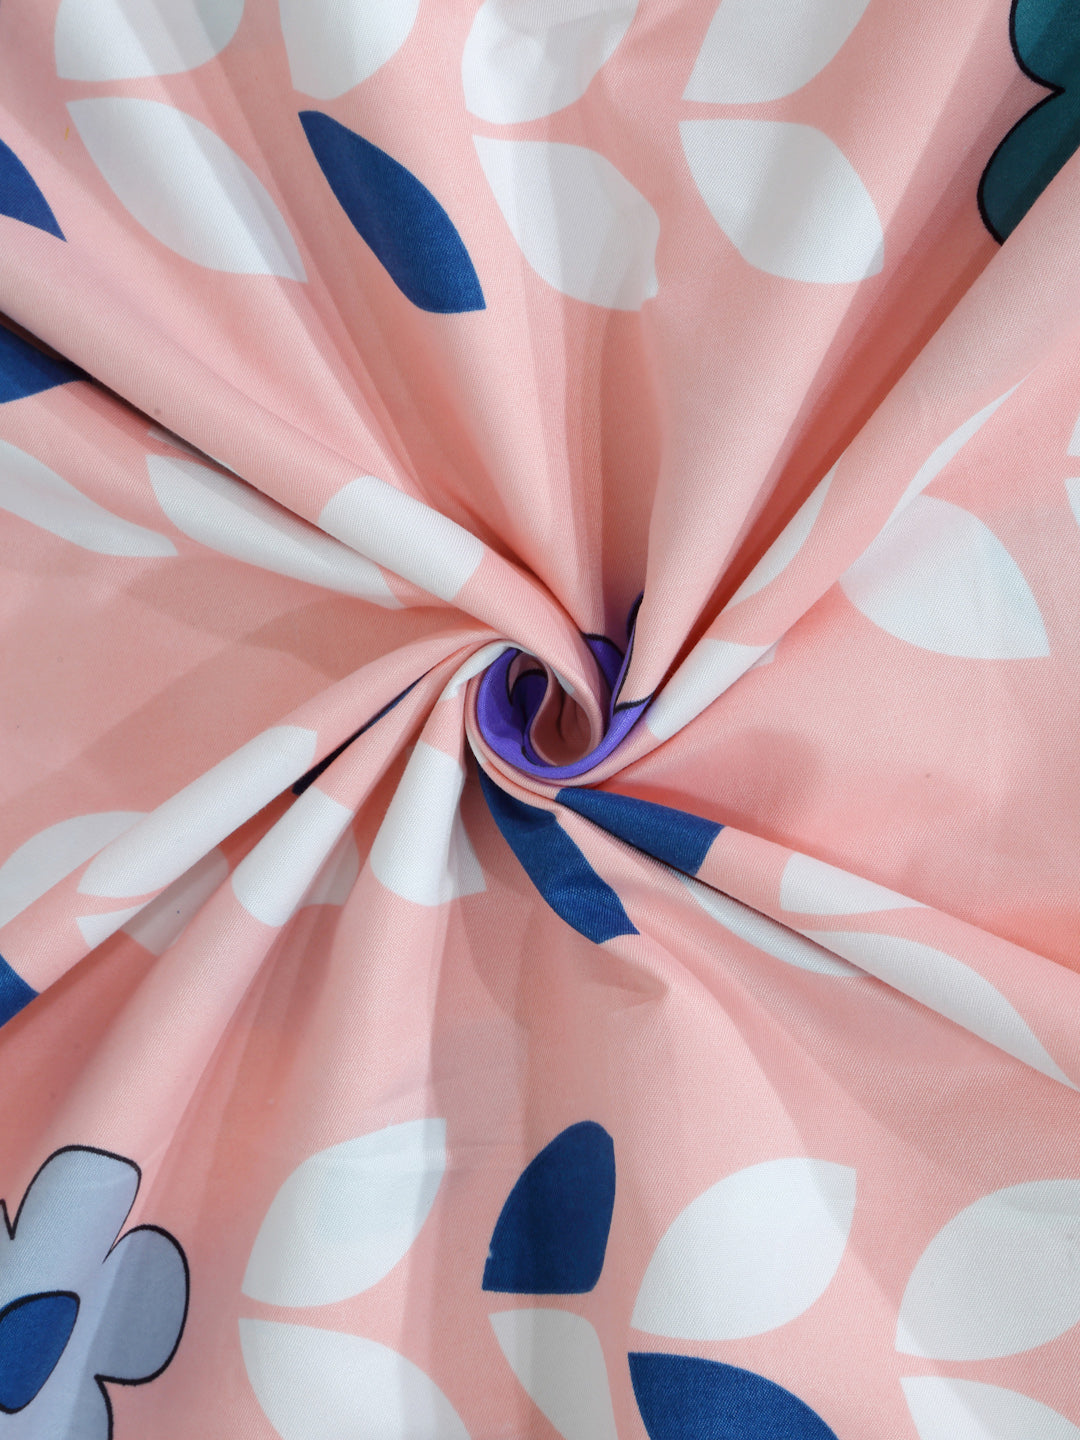 Arrabi Pink Leaf TC Cotton Blend Super King Size Bedsheet with 2 Pillow Covers (270 X 260 cm)